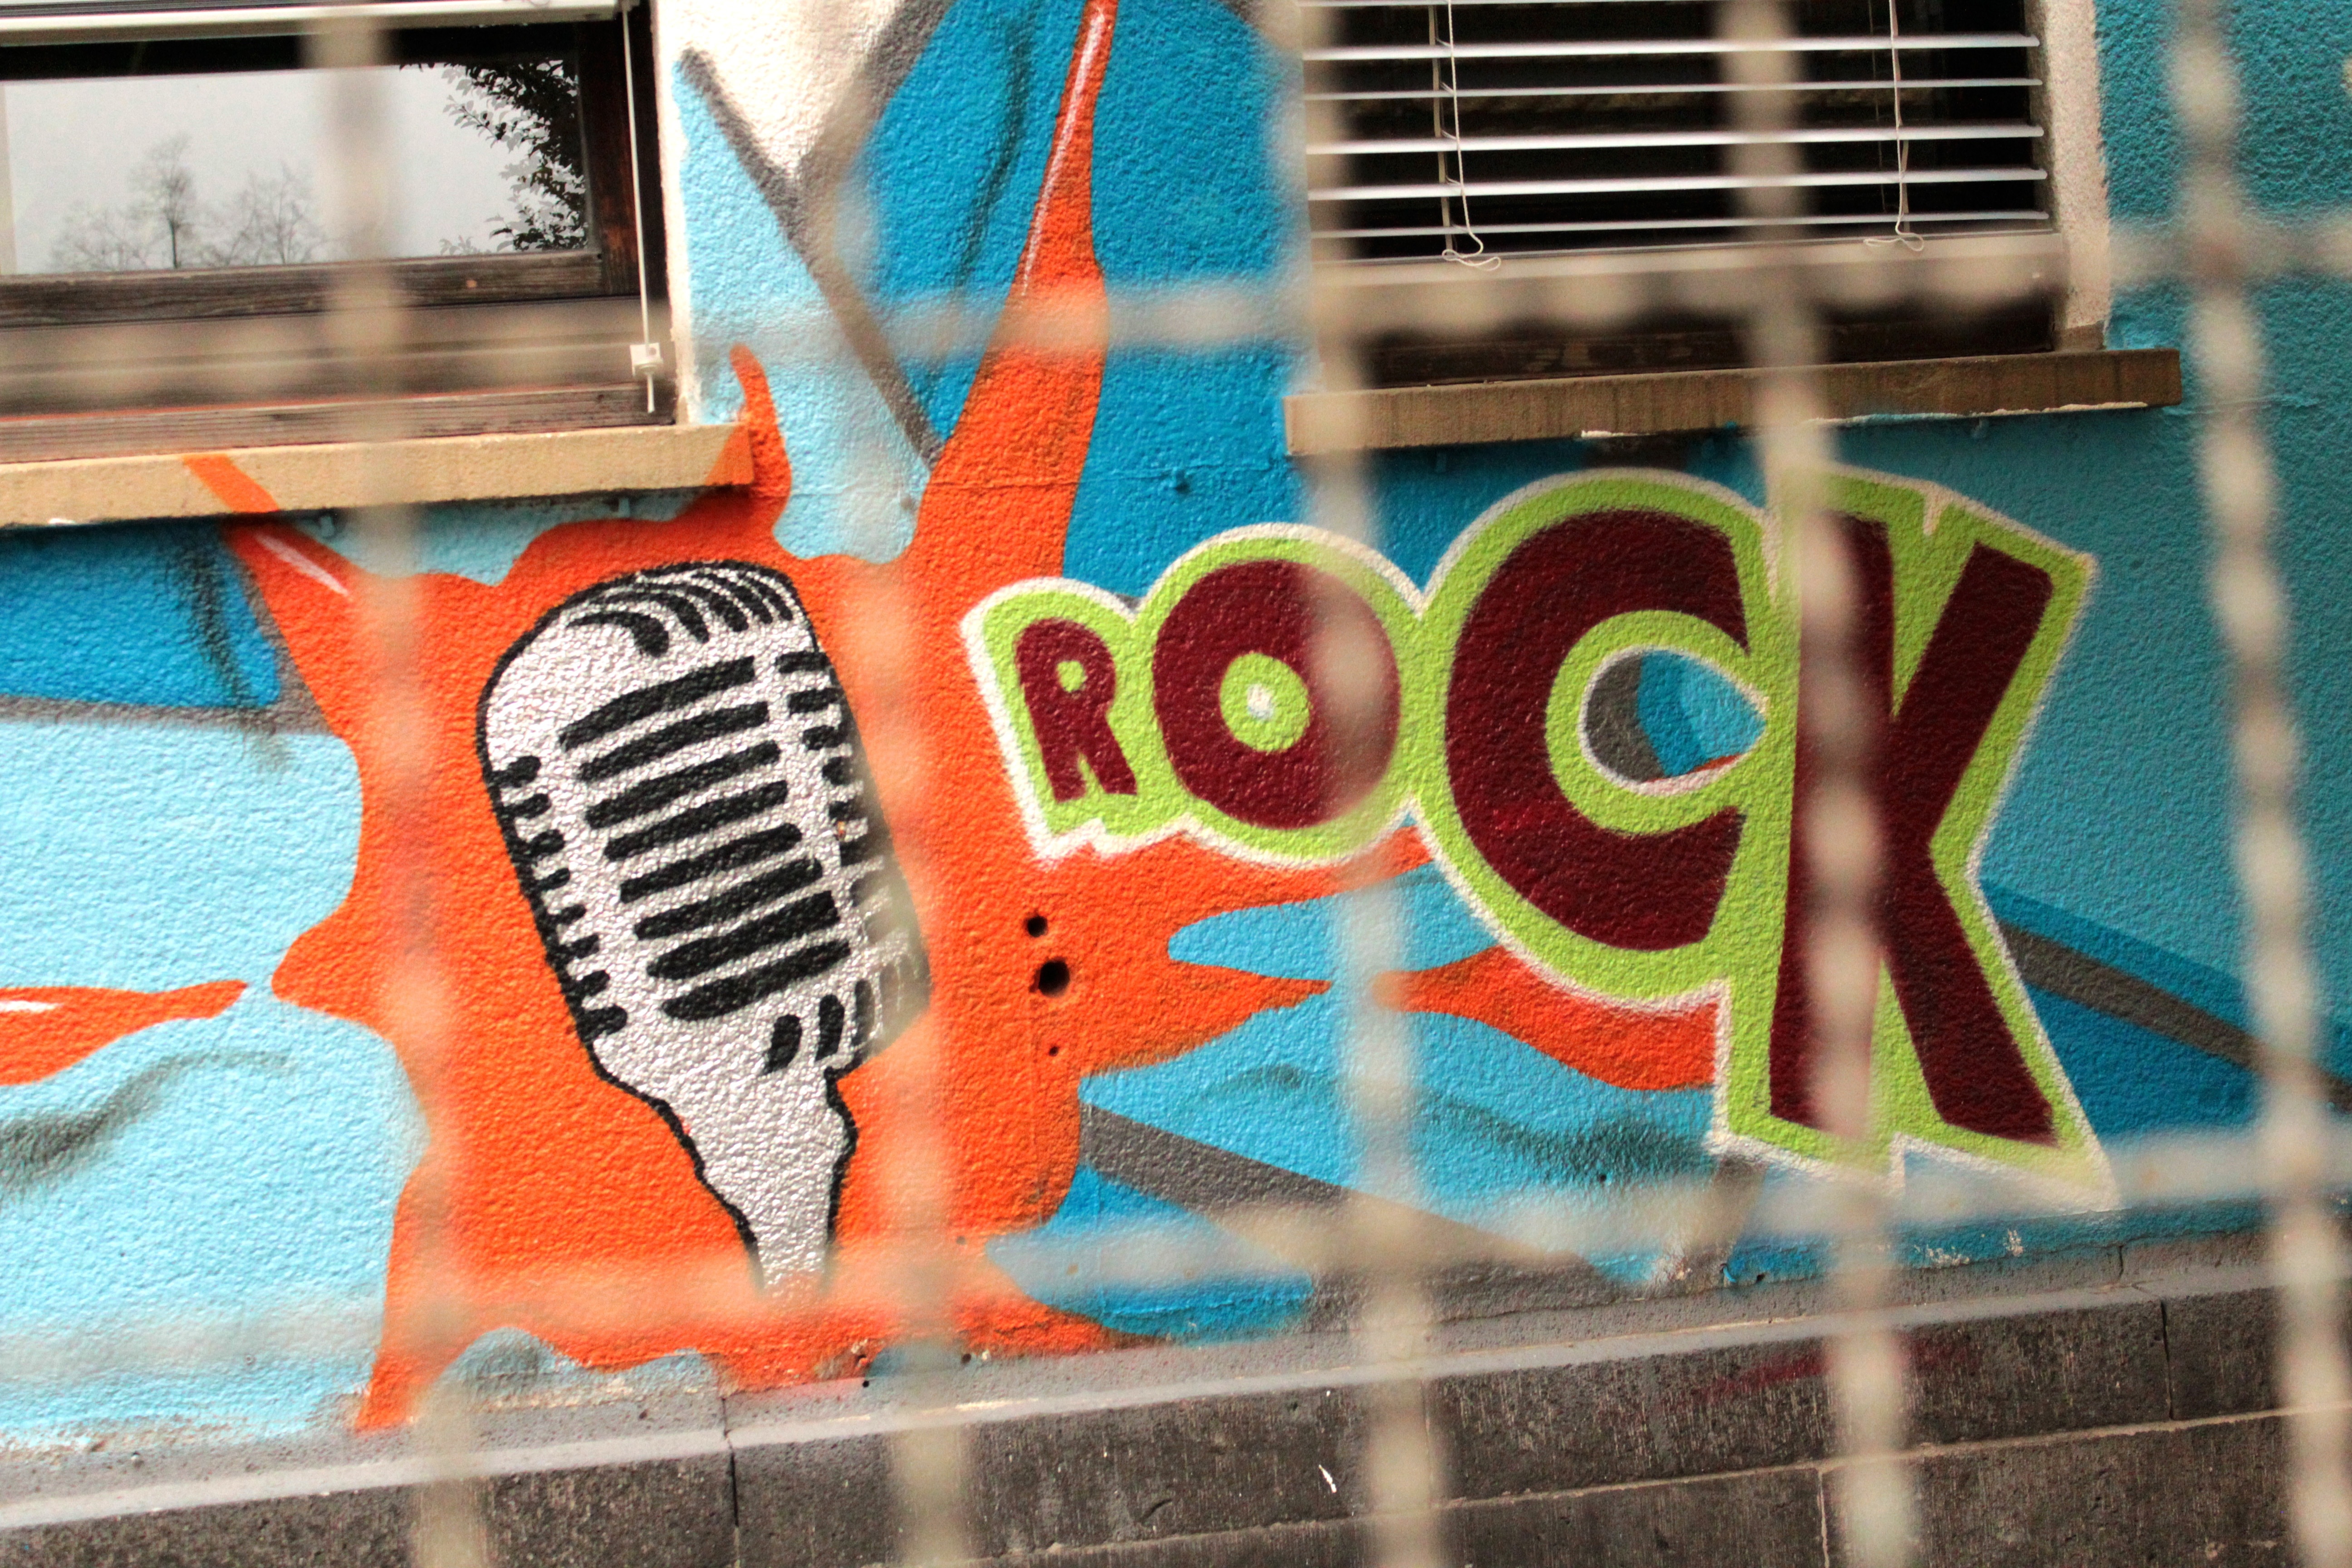 Rock wall graffiti